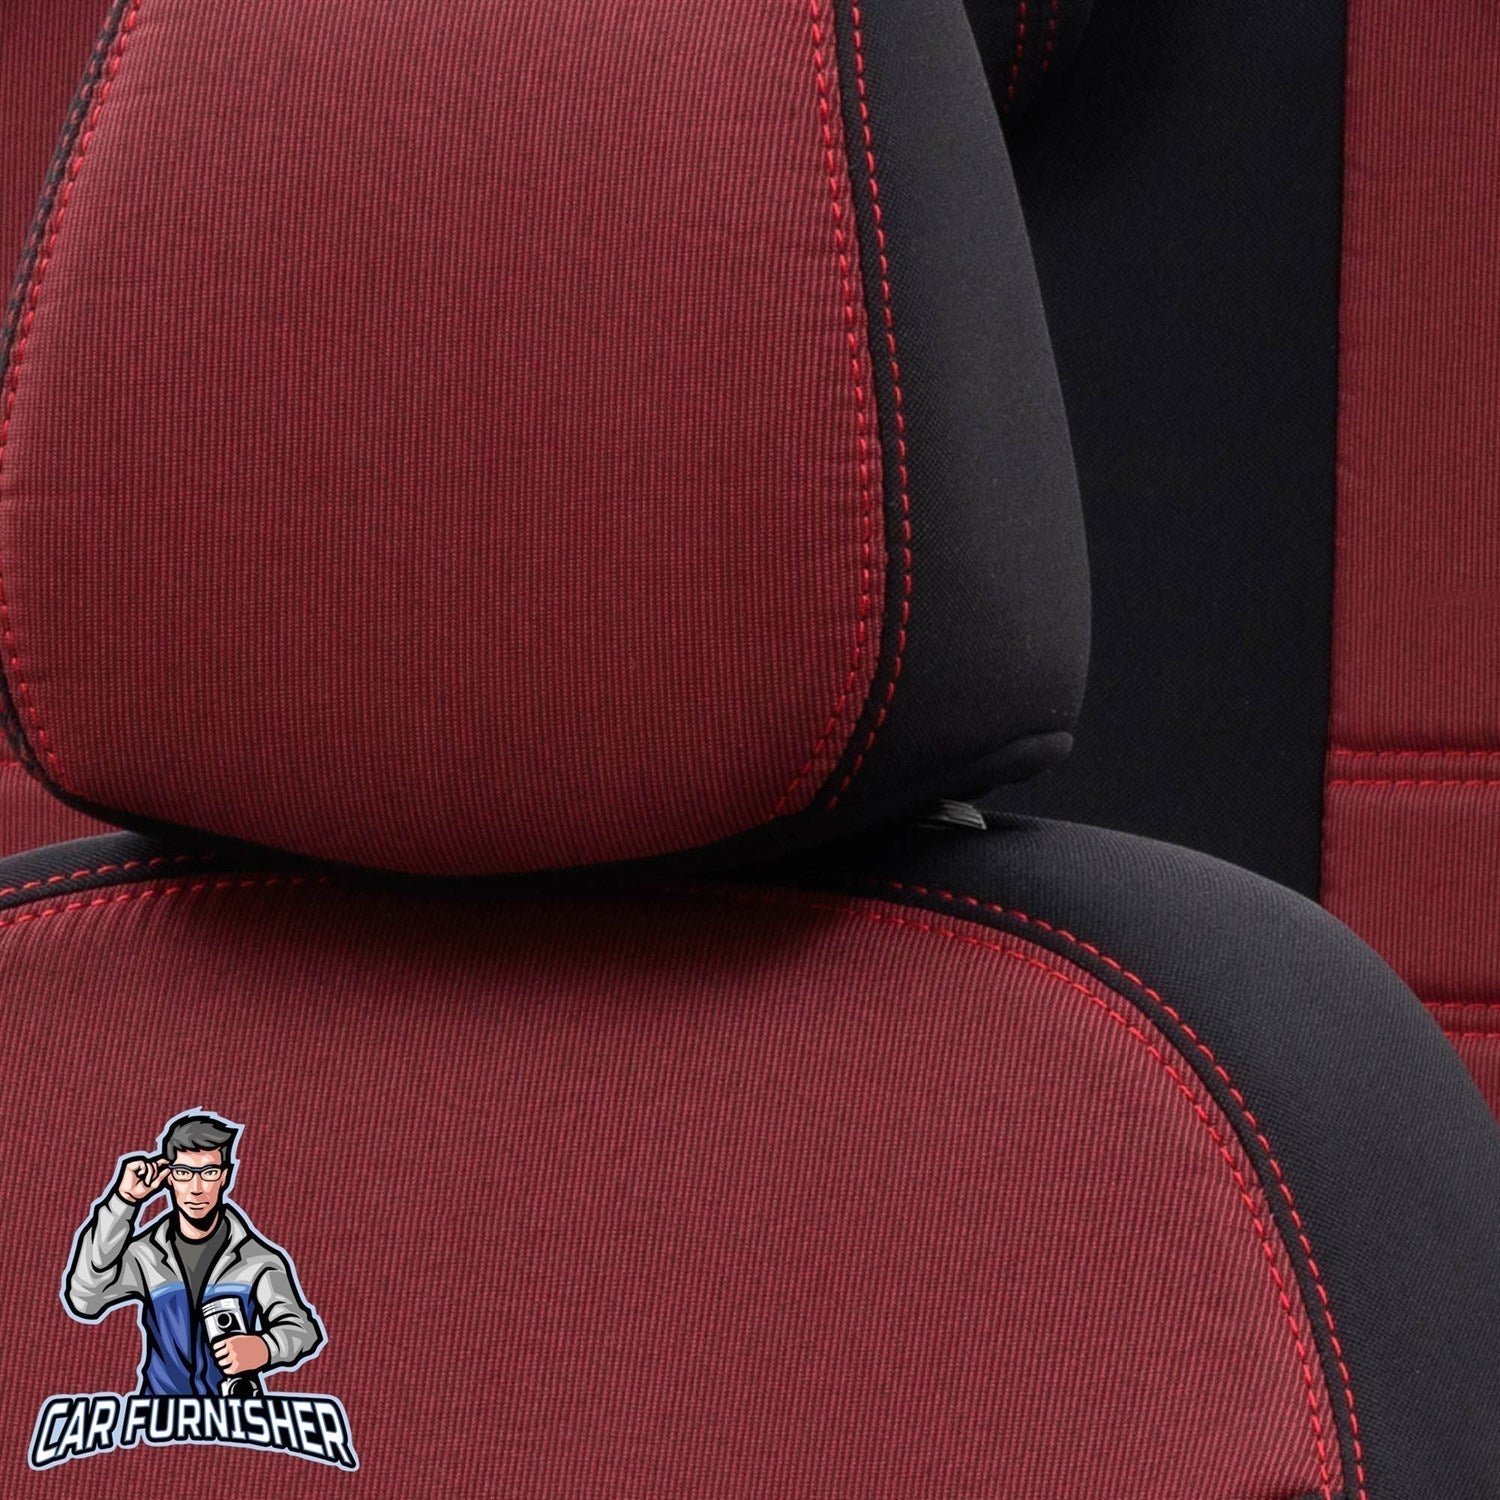 Renault Premium Seat Cover Original Jacquard Design Red Front Seats (2 Seats + Handrest + Headrests) Jacquard Fabric